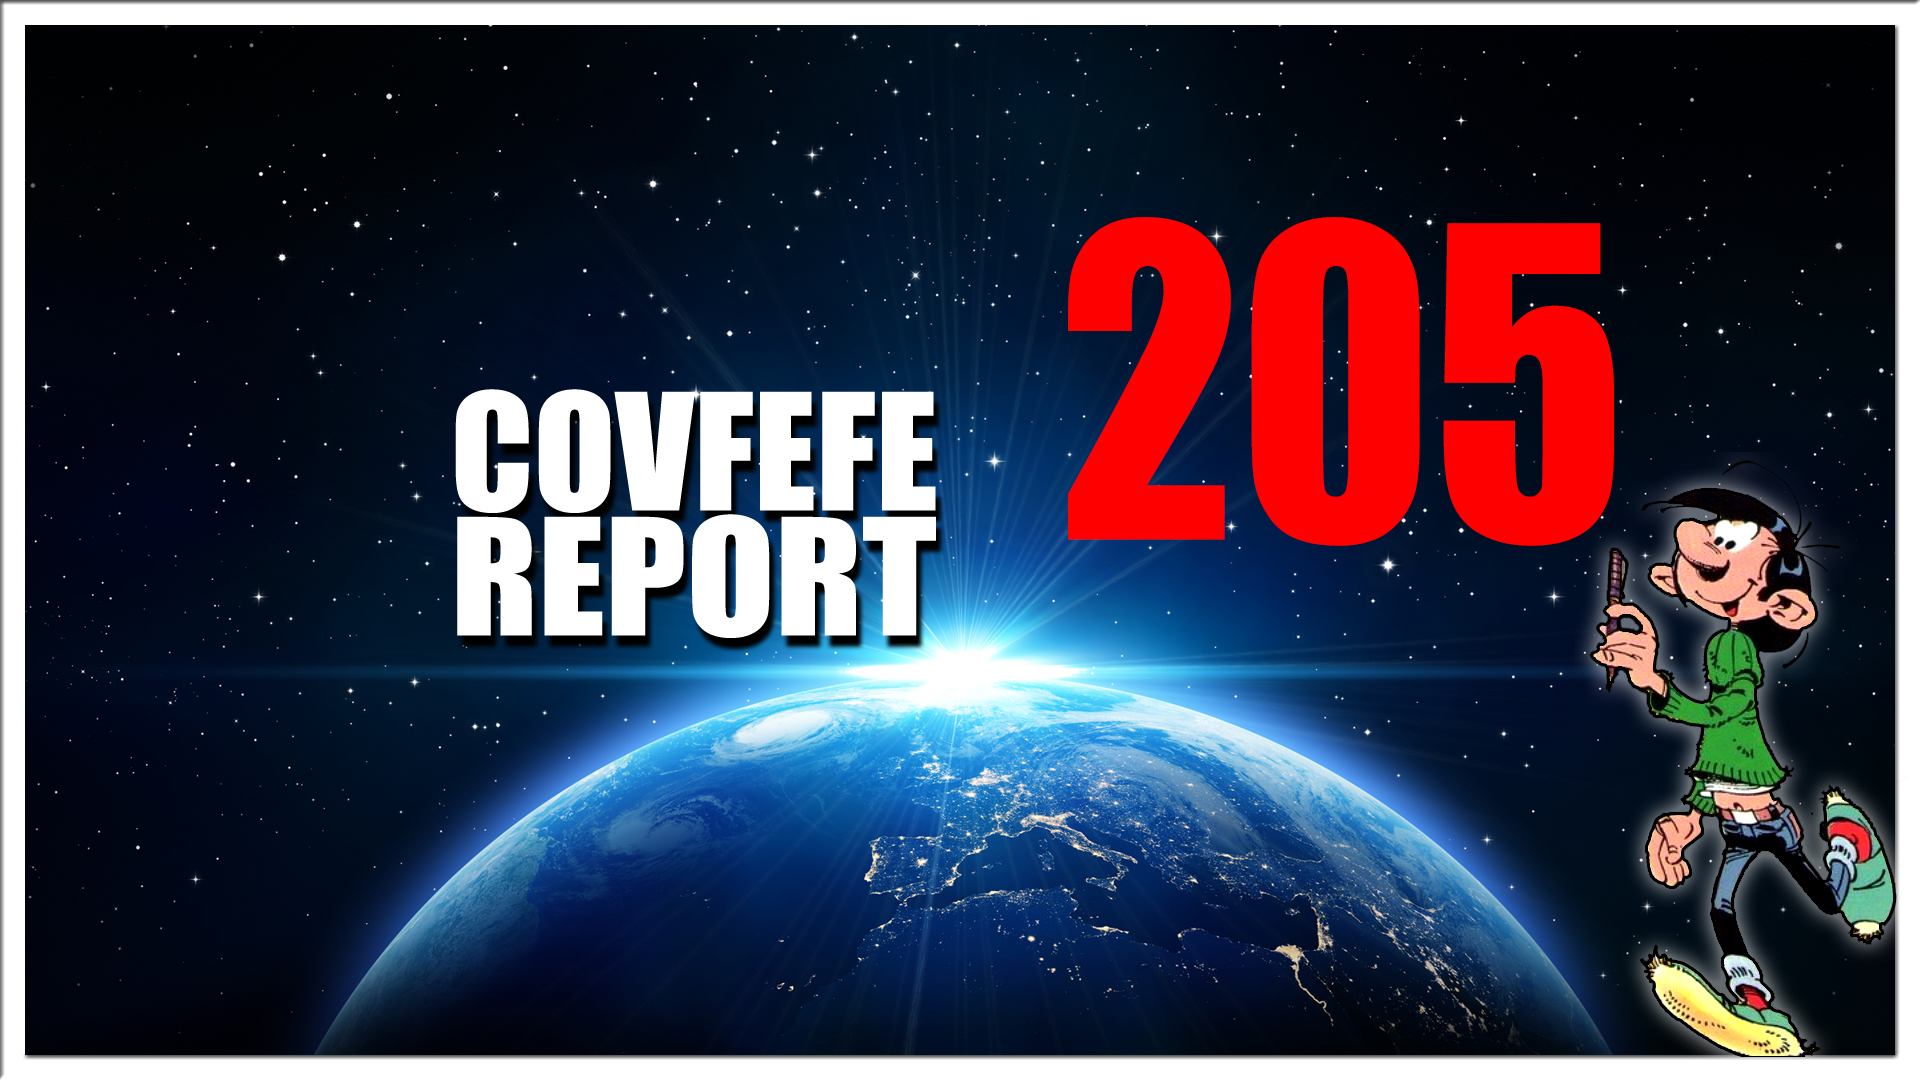 Covfefe Report 205. ngt